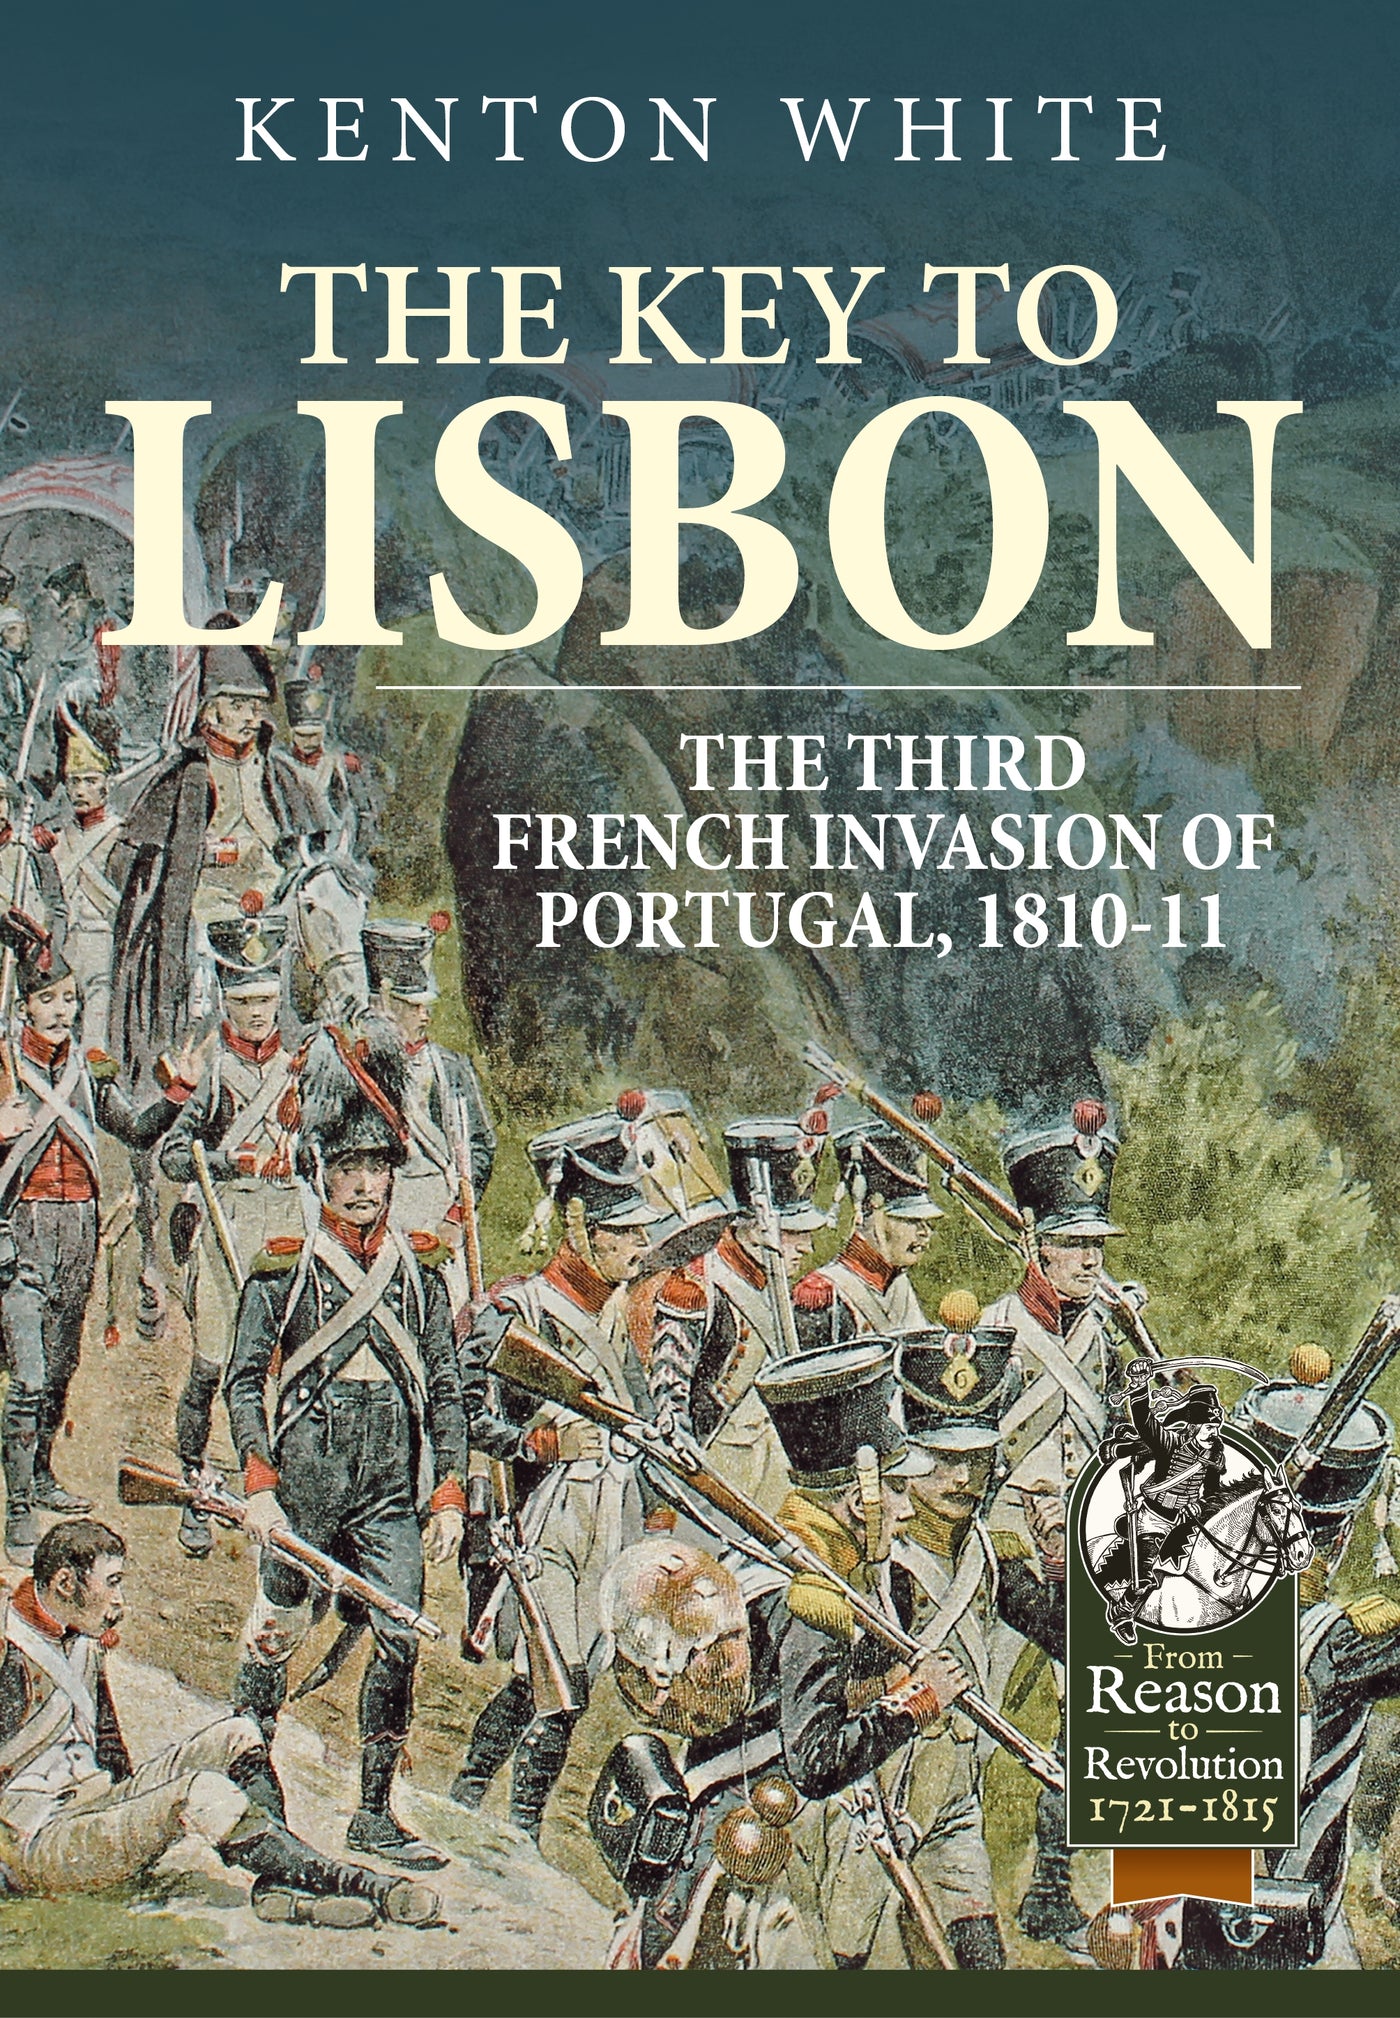 The Key to Lisbon